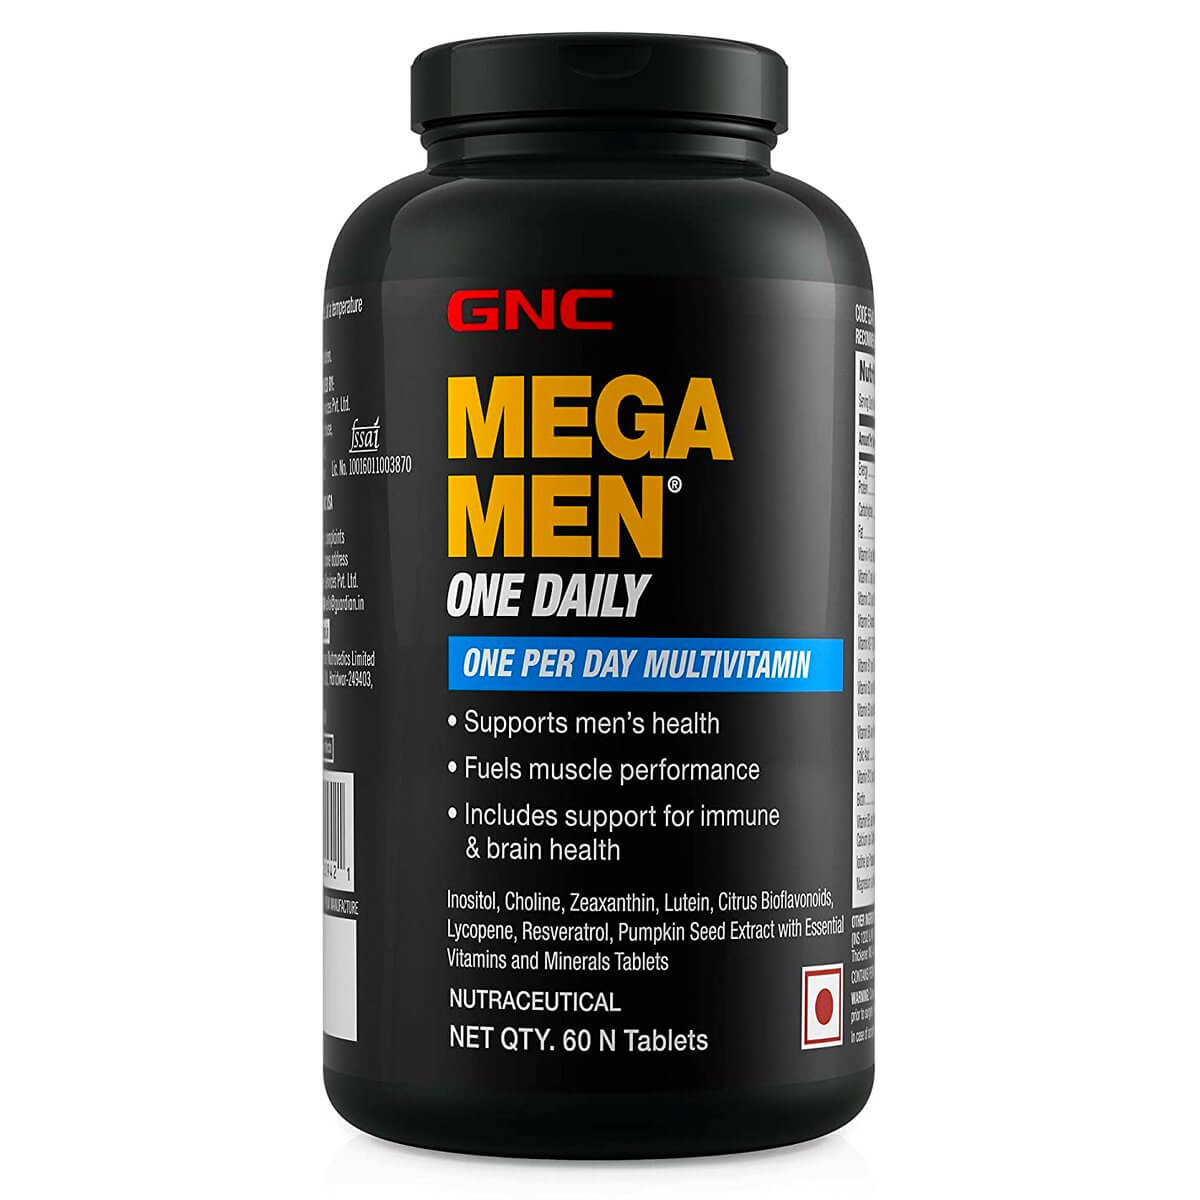 GNC Mega men one daily